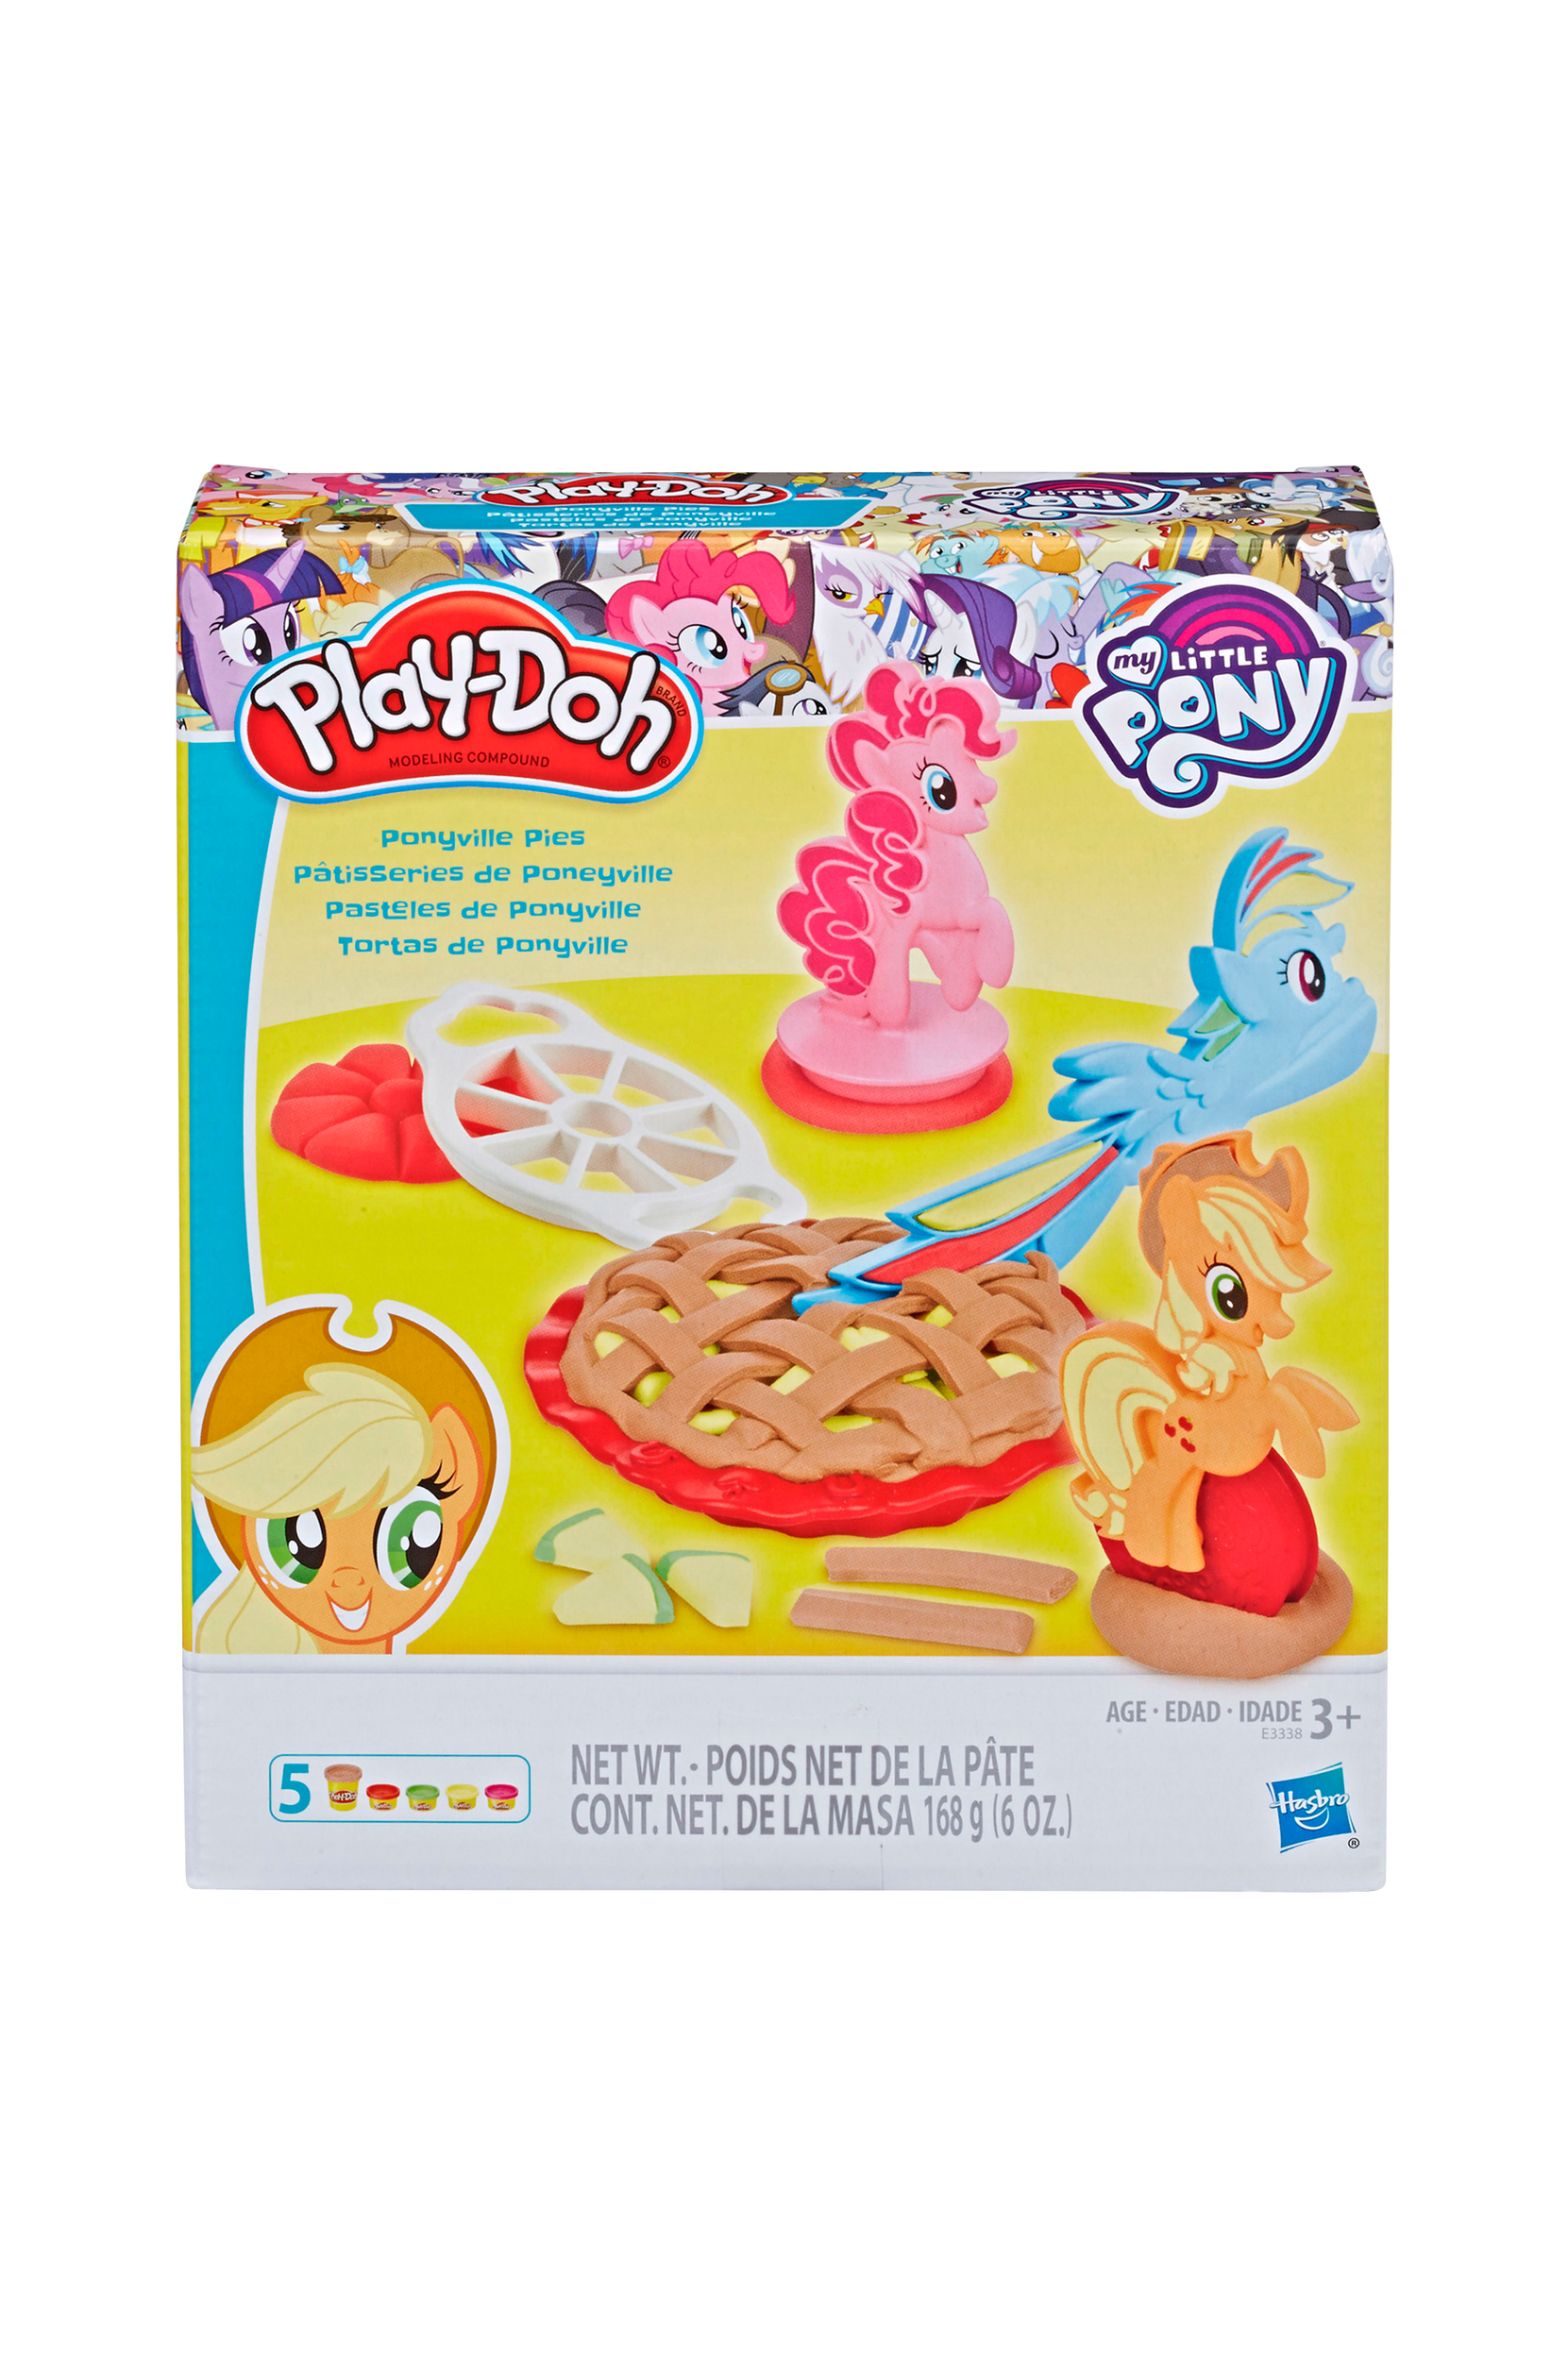 My Little Pony Ponyville, Play-Doh